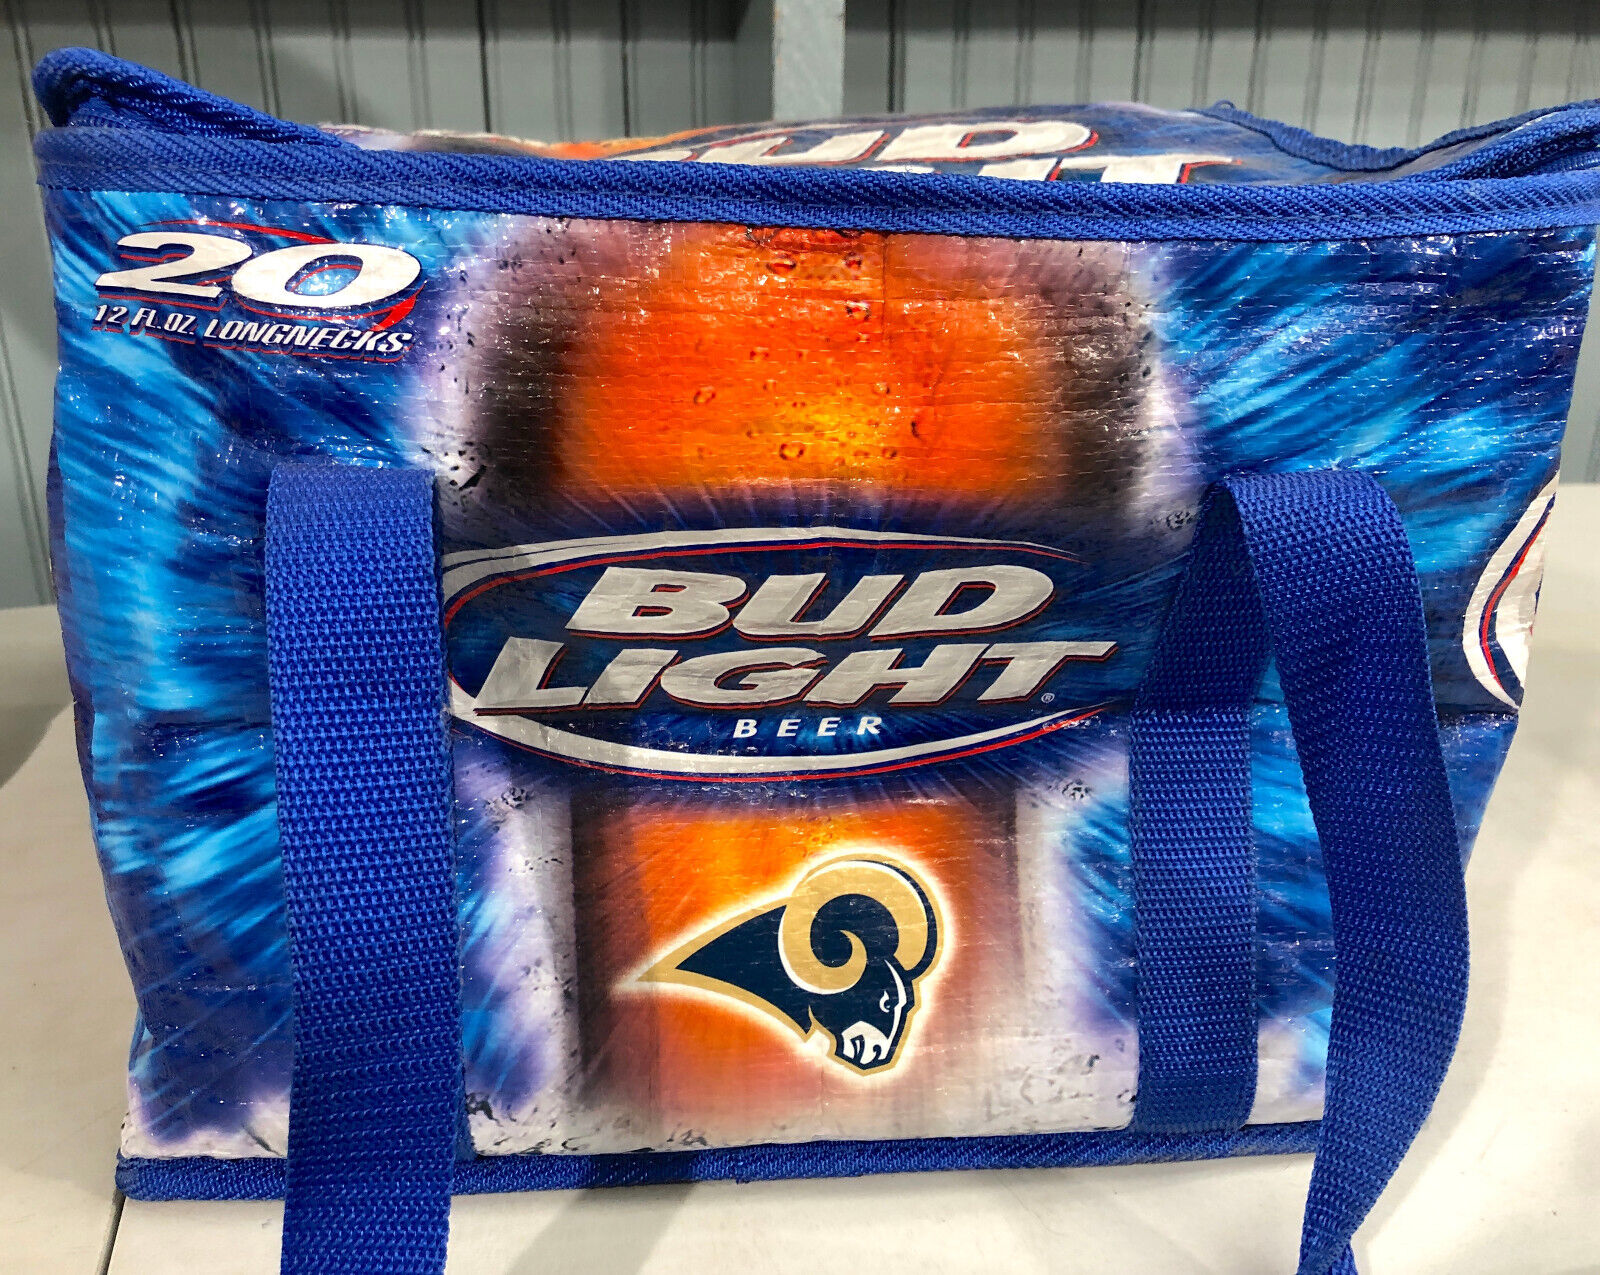 Budweiser Bud Light Insulated Folding Beer Cooler St. Louis Lo...